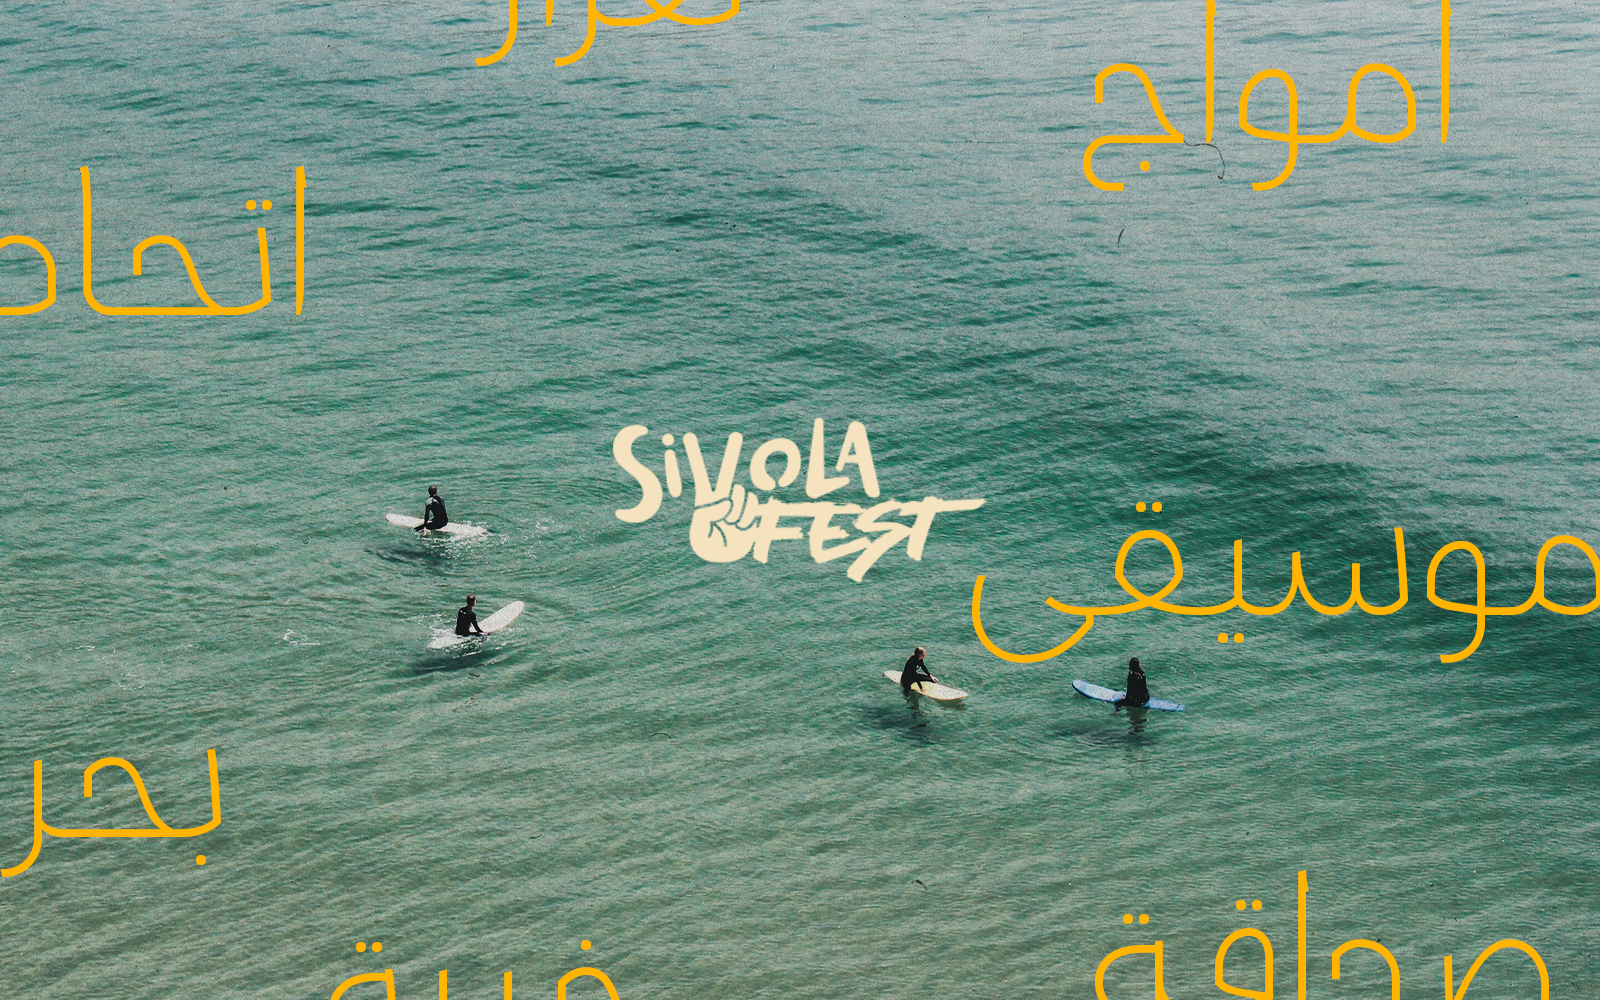 SiVola Fest Marocco surf